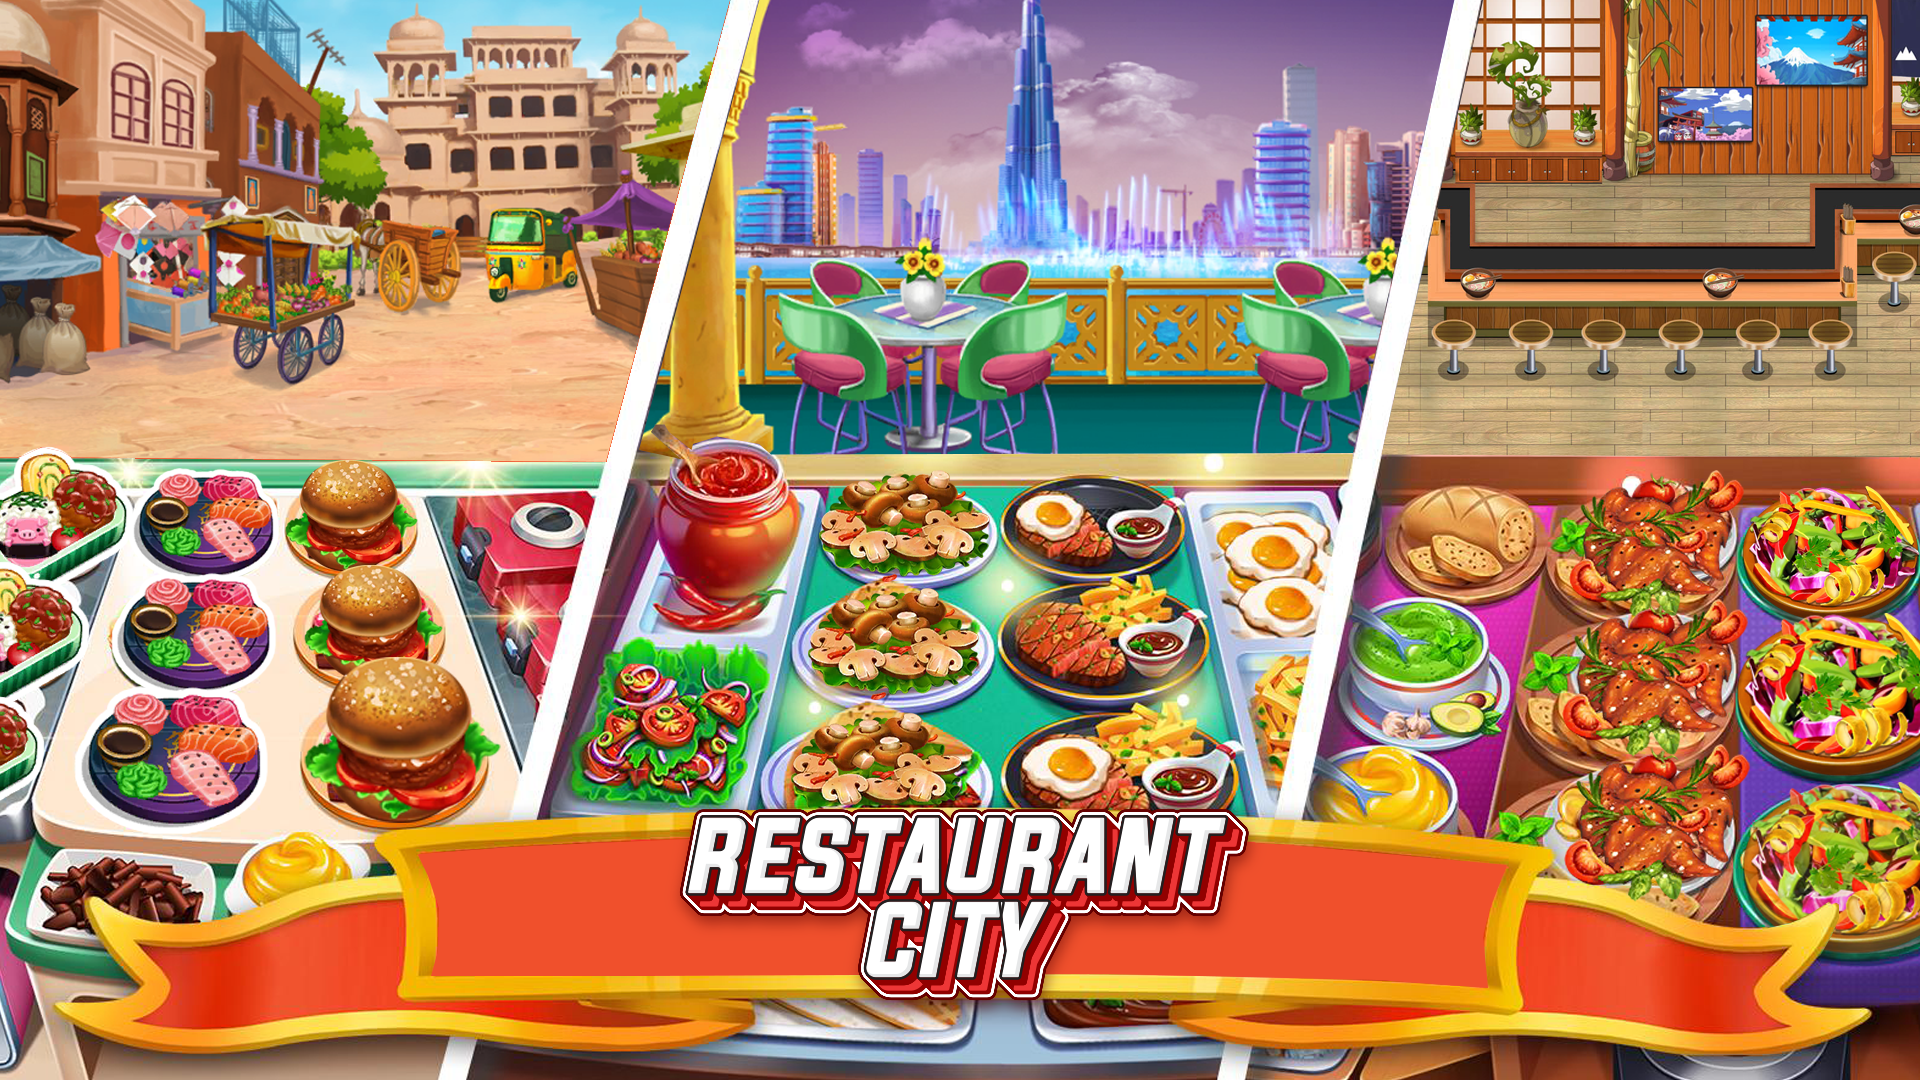 Screenshot 1 of Restaurant city - 新しいシェフゲーム 1.0.1